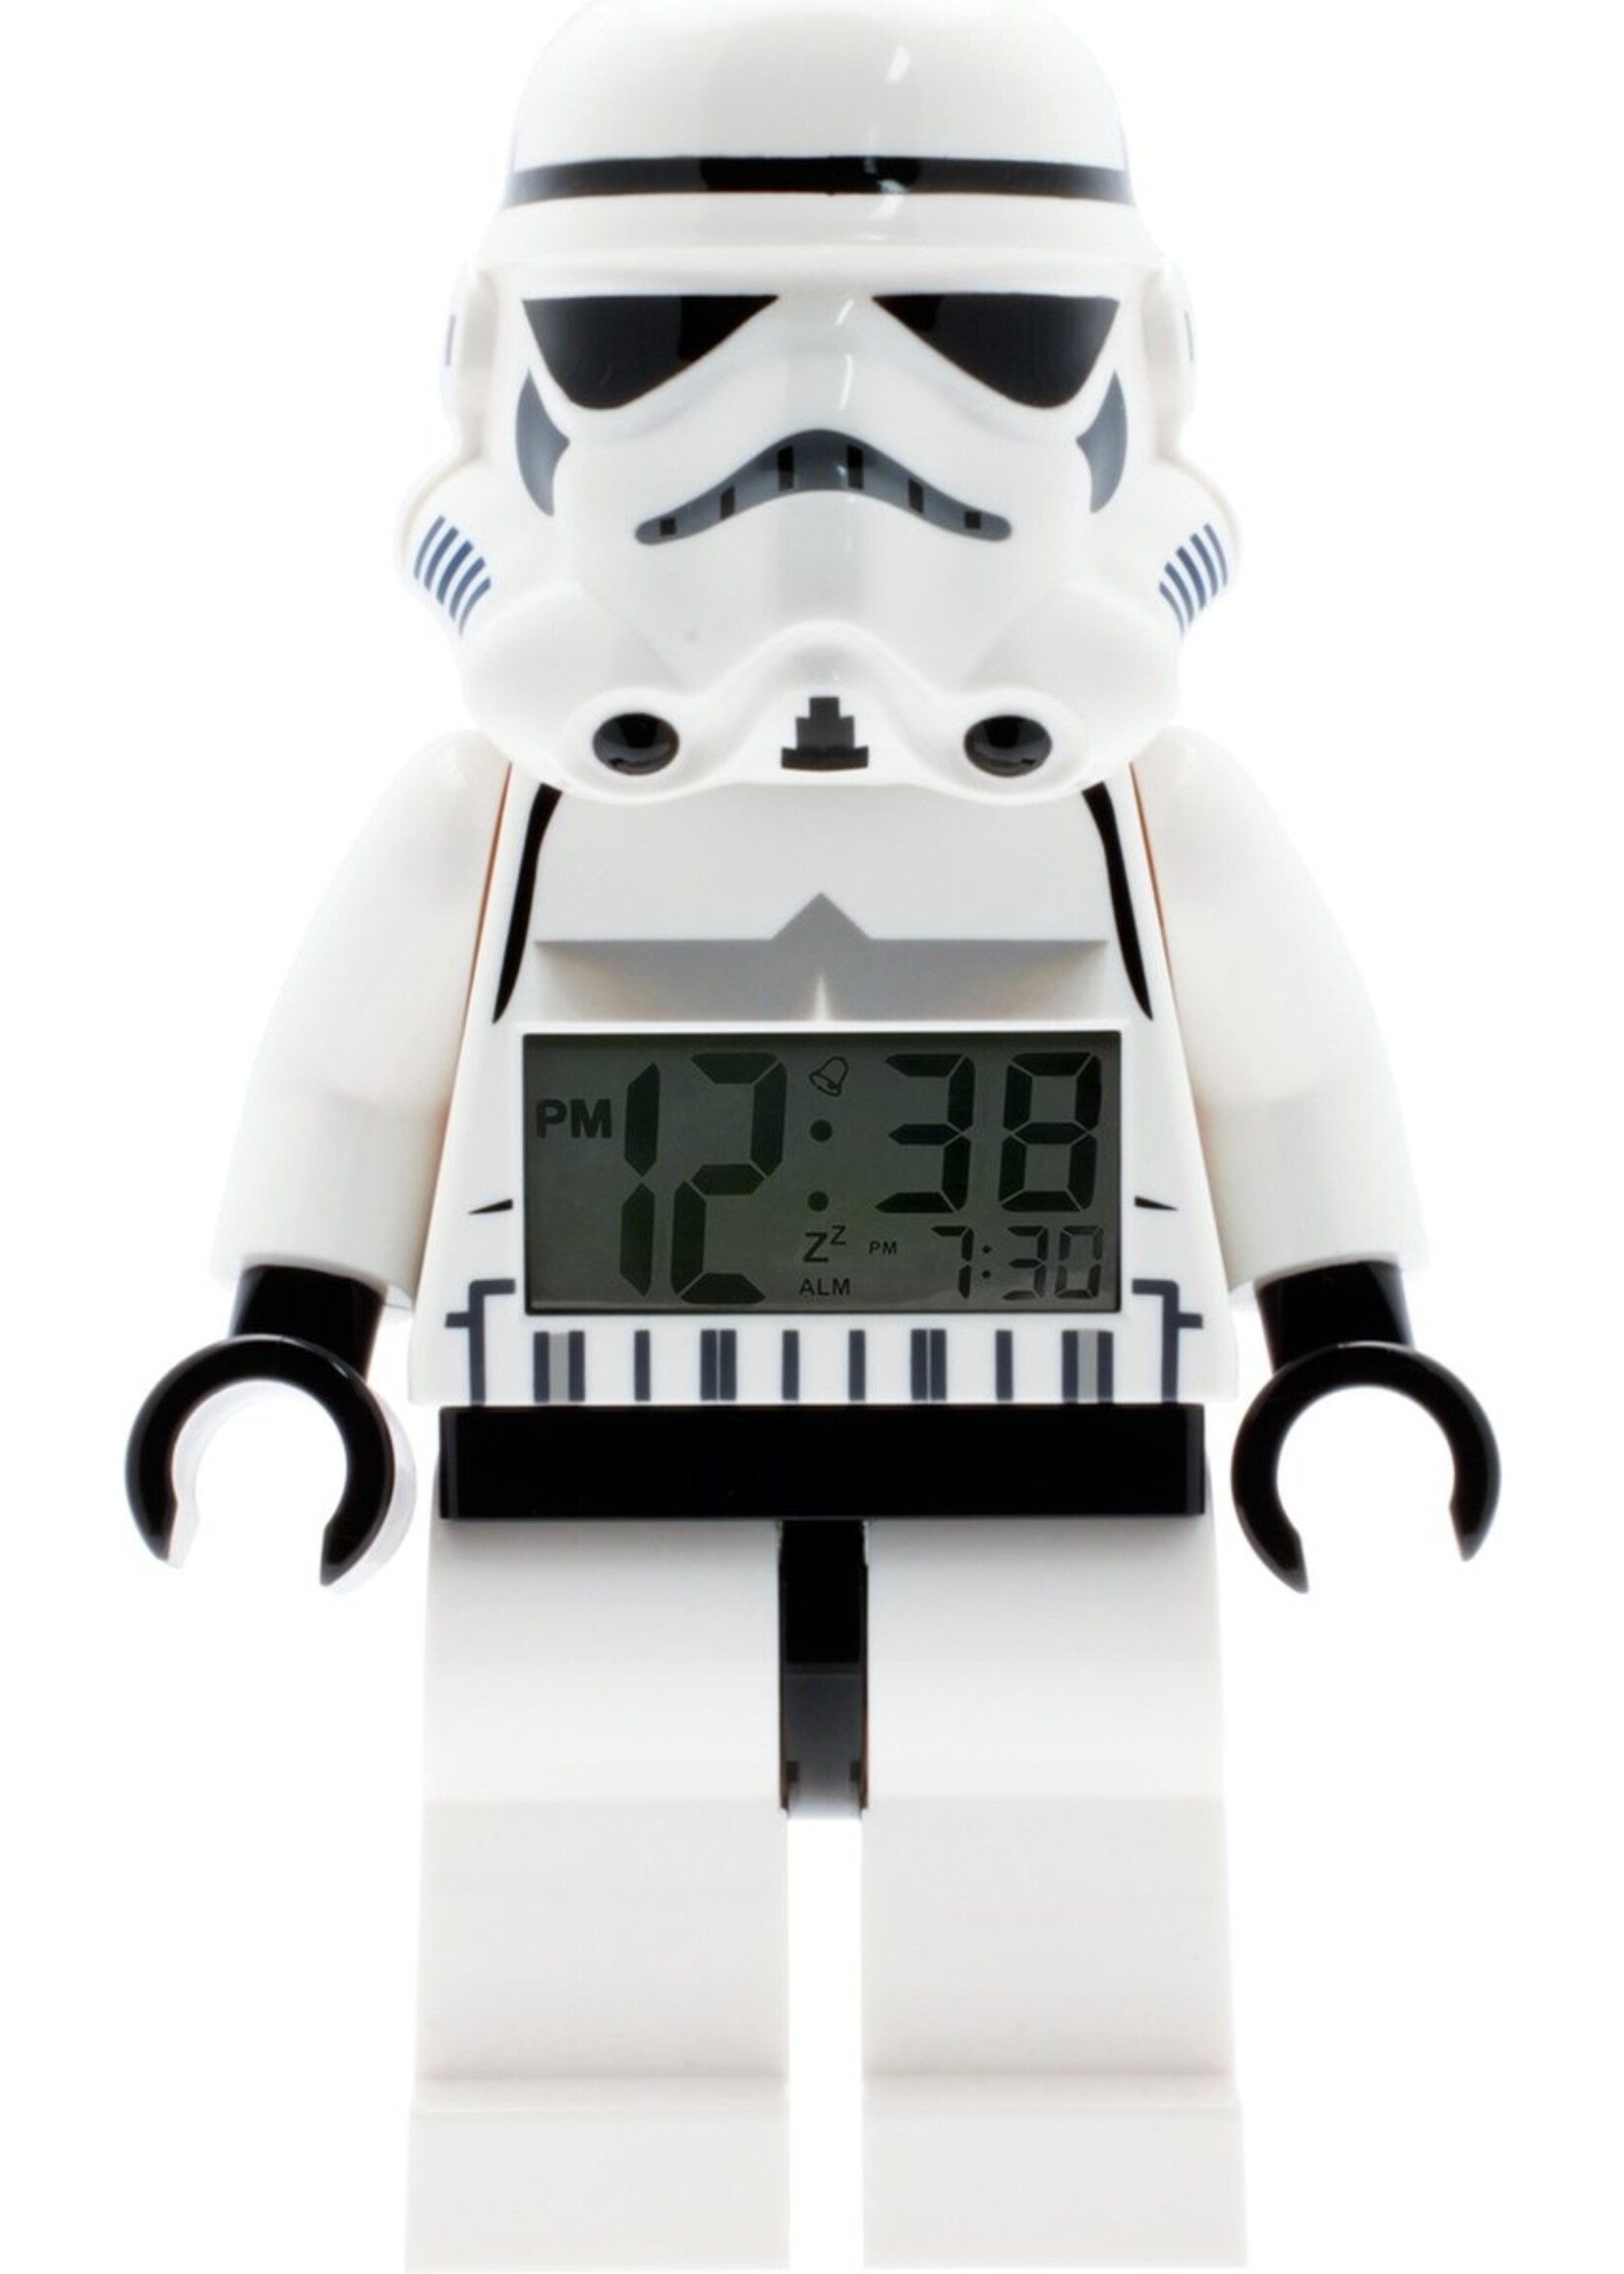 LEGO Star Wars Storm Trooper Clock Alarm